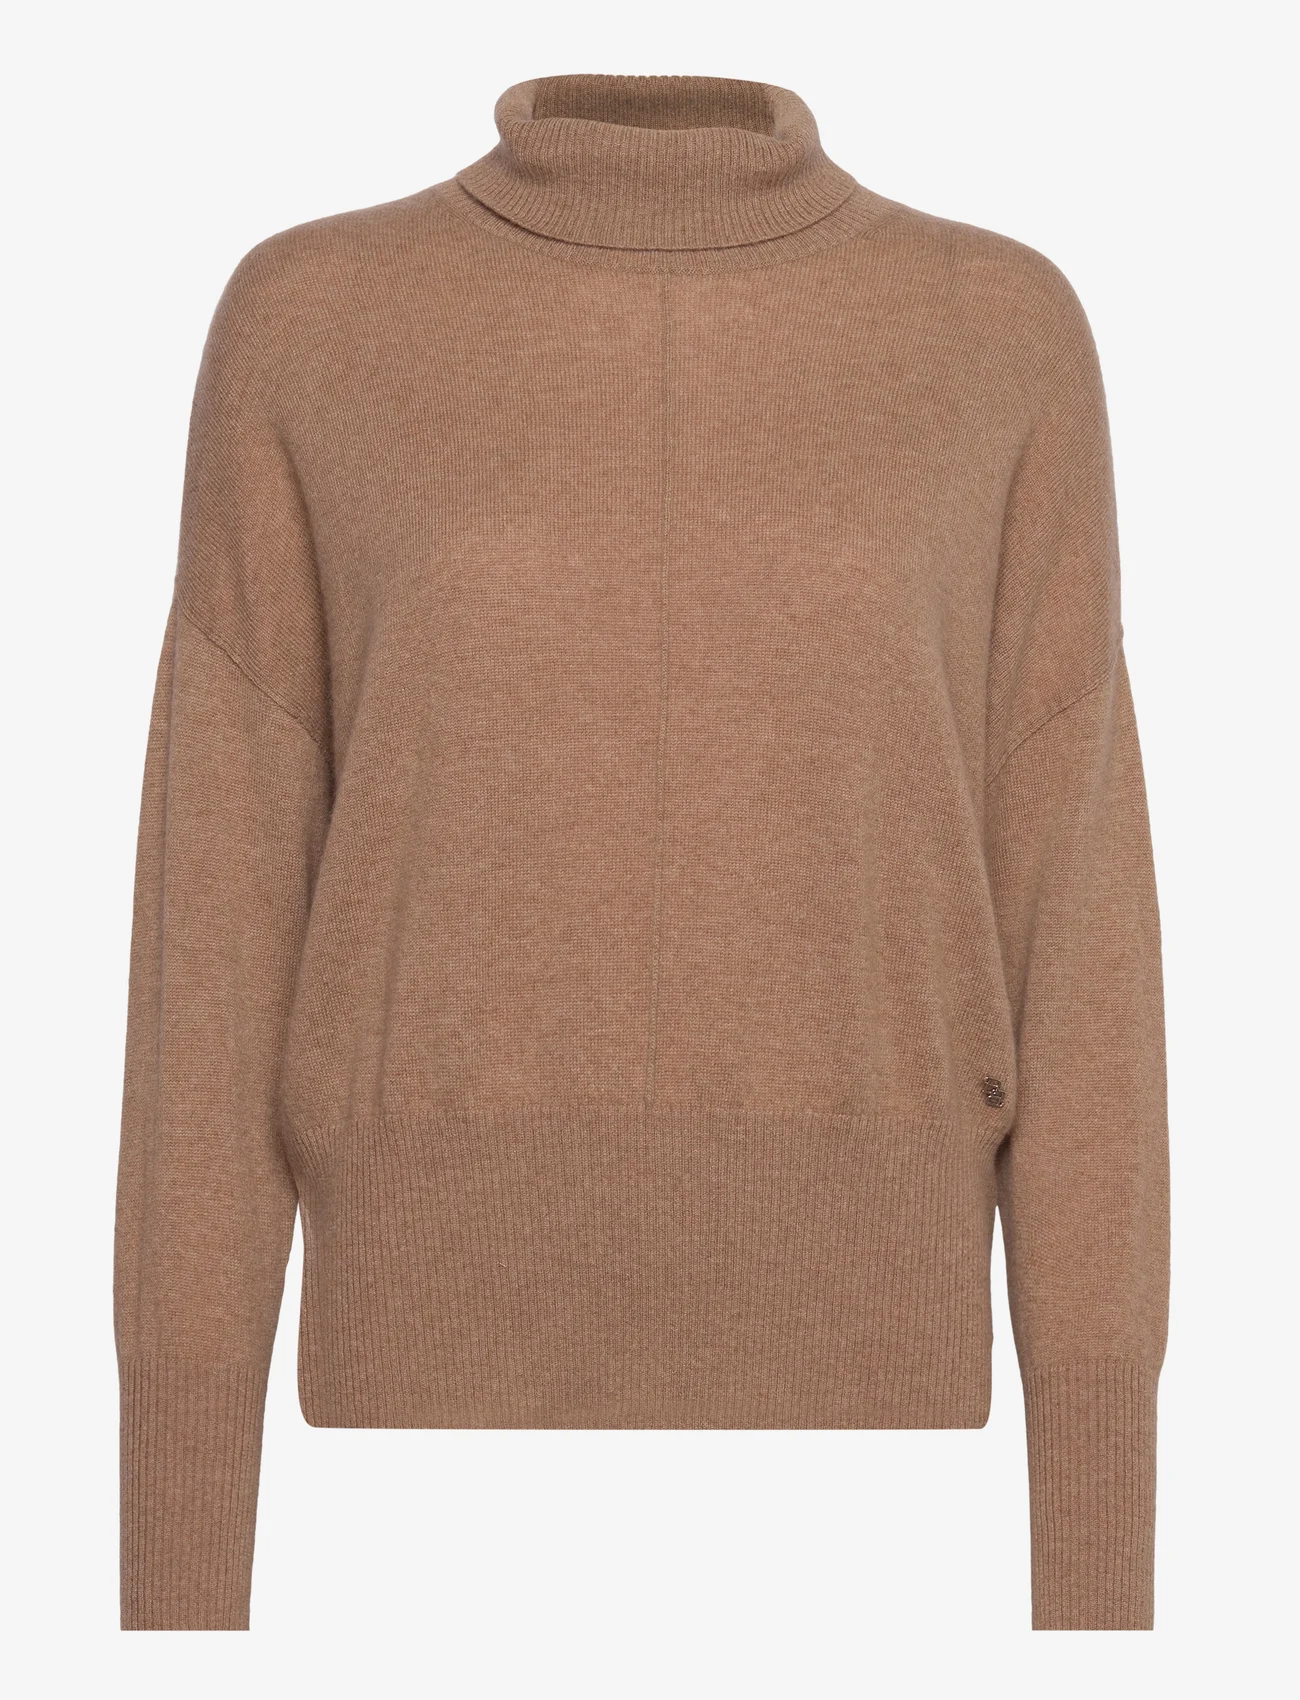 Balmuir - Mirjam cashmere sweater - coltruien - soft camel - 0